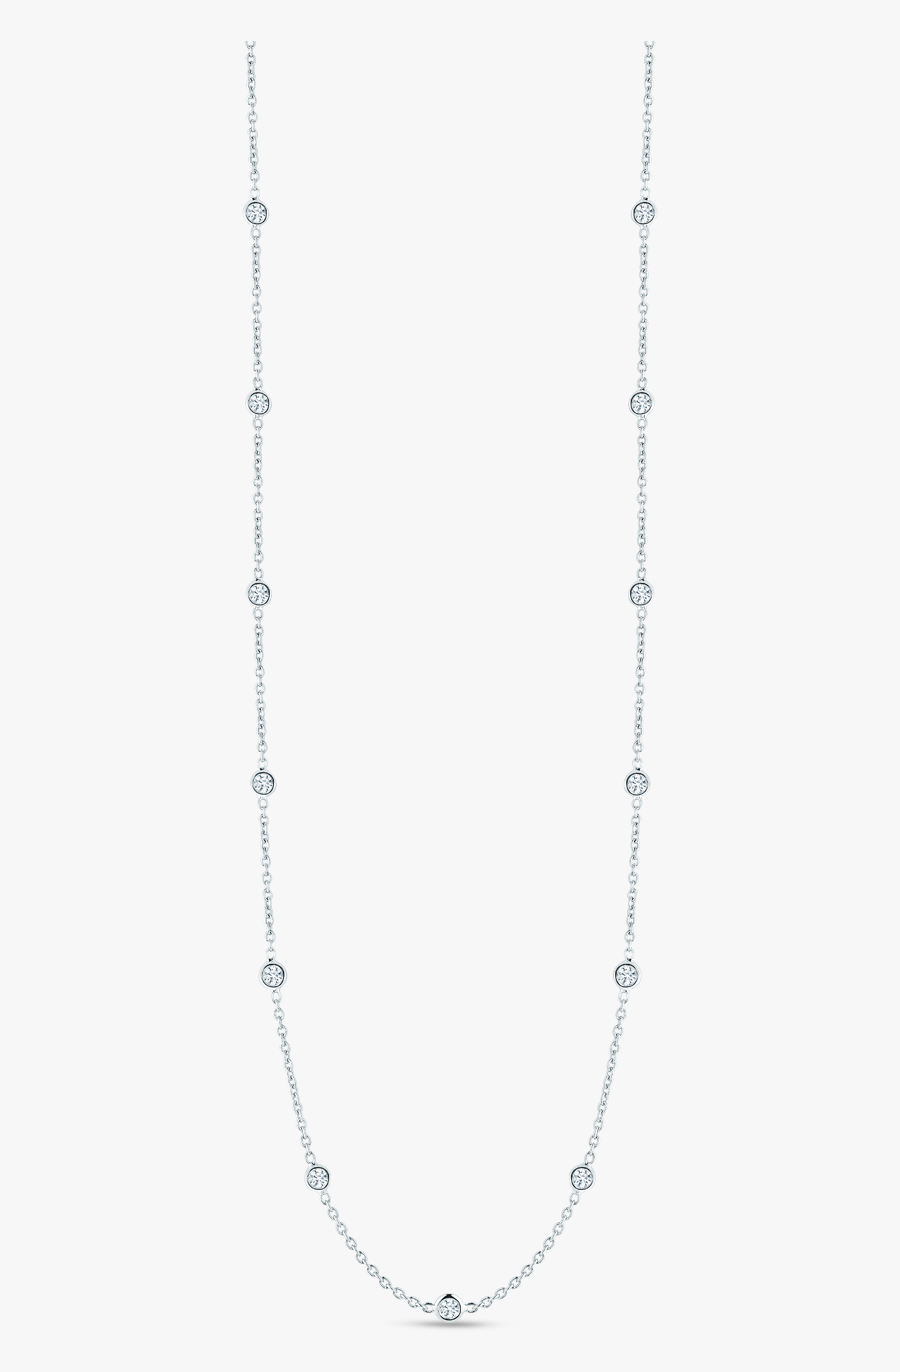 White Gold Necklace Png - 15 Diamond Necklace, Transparent Clipart